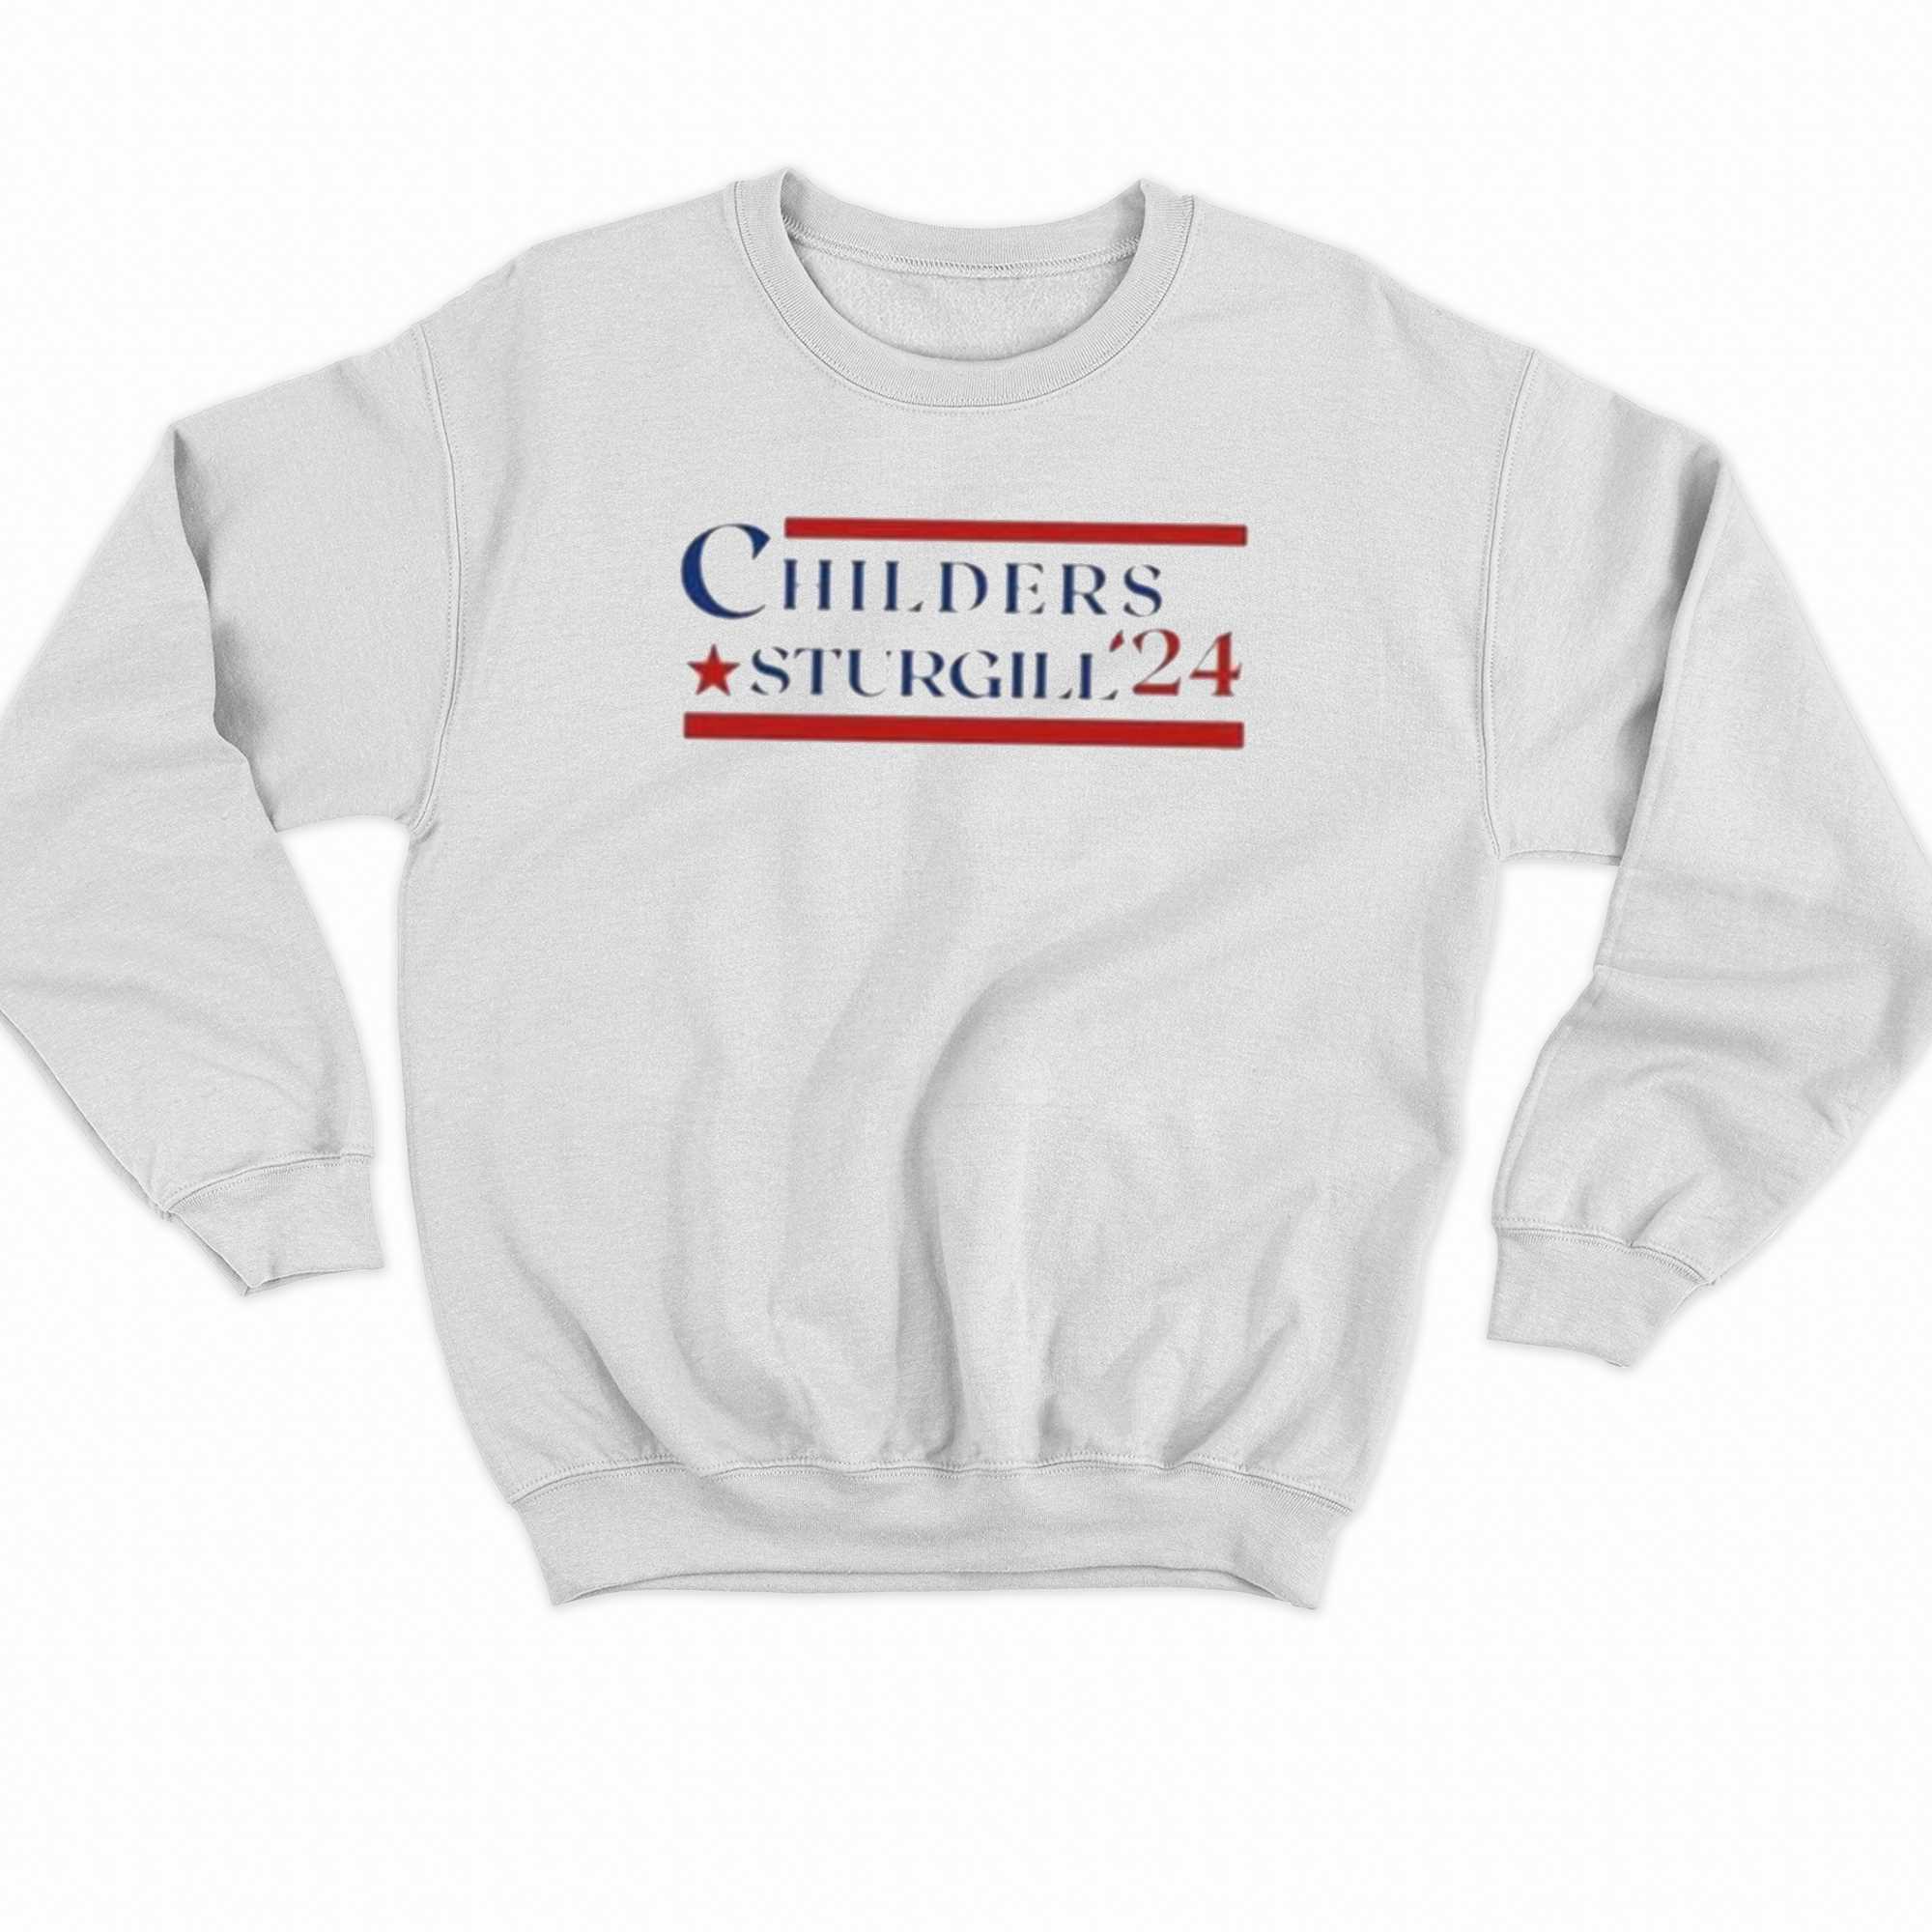 Tyler Childers Childers Sturgill 24 T Shirt 